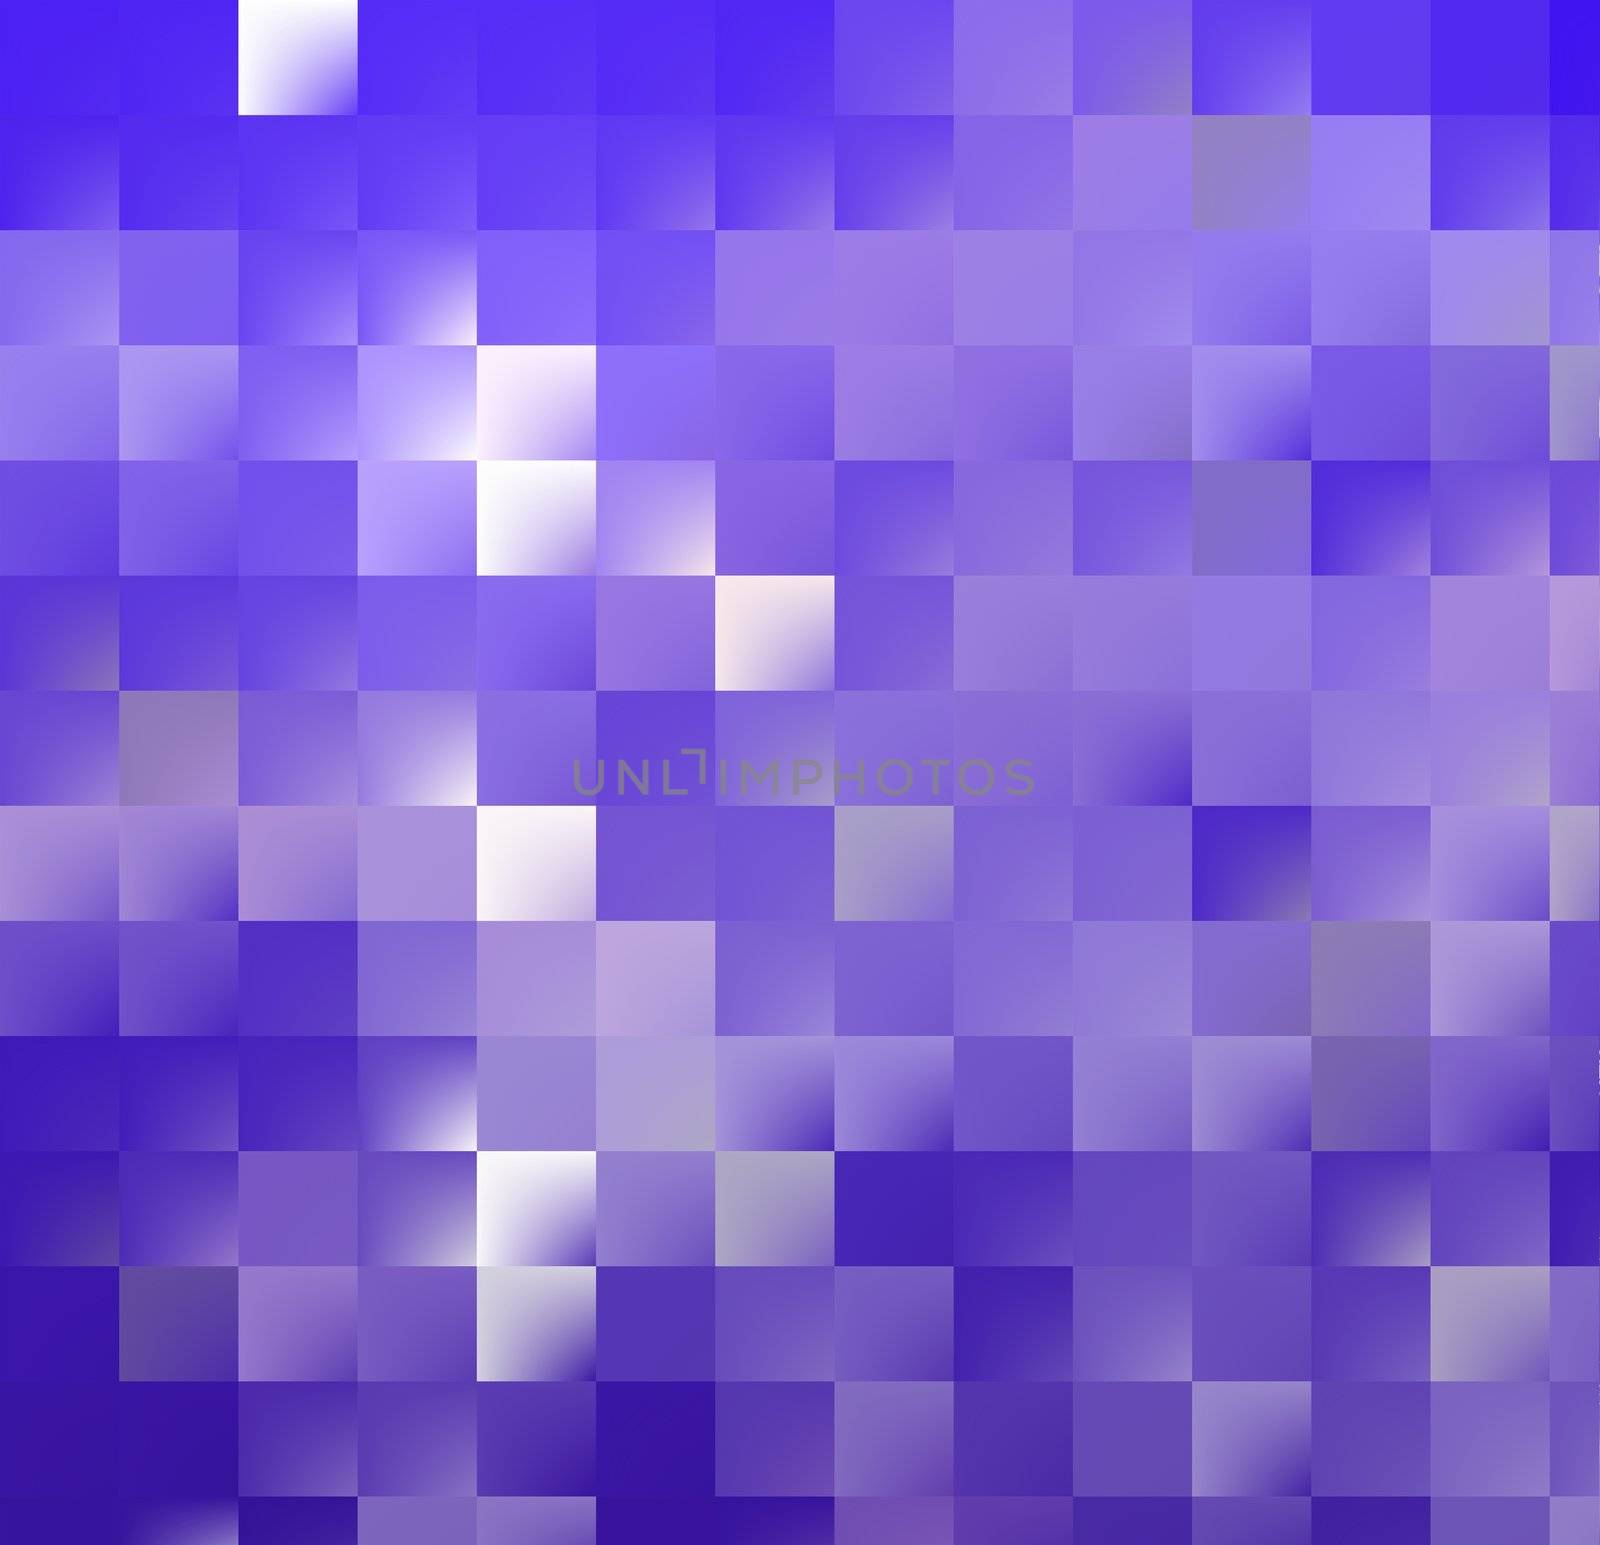 blue-purple mosaic background with glass/ metallic effect